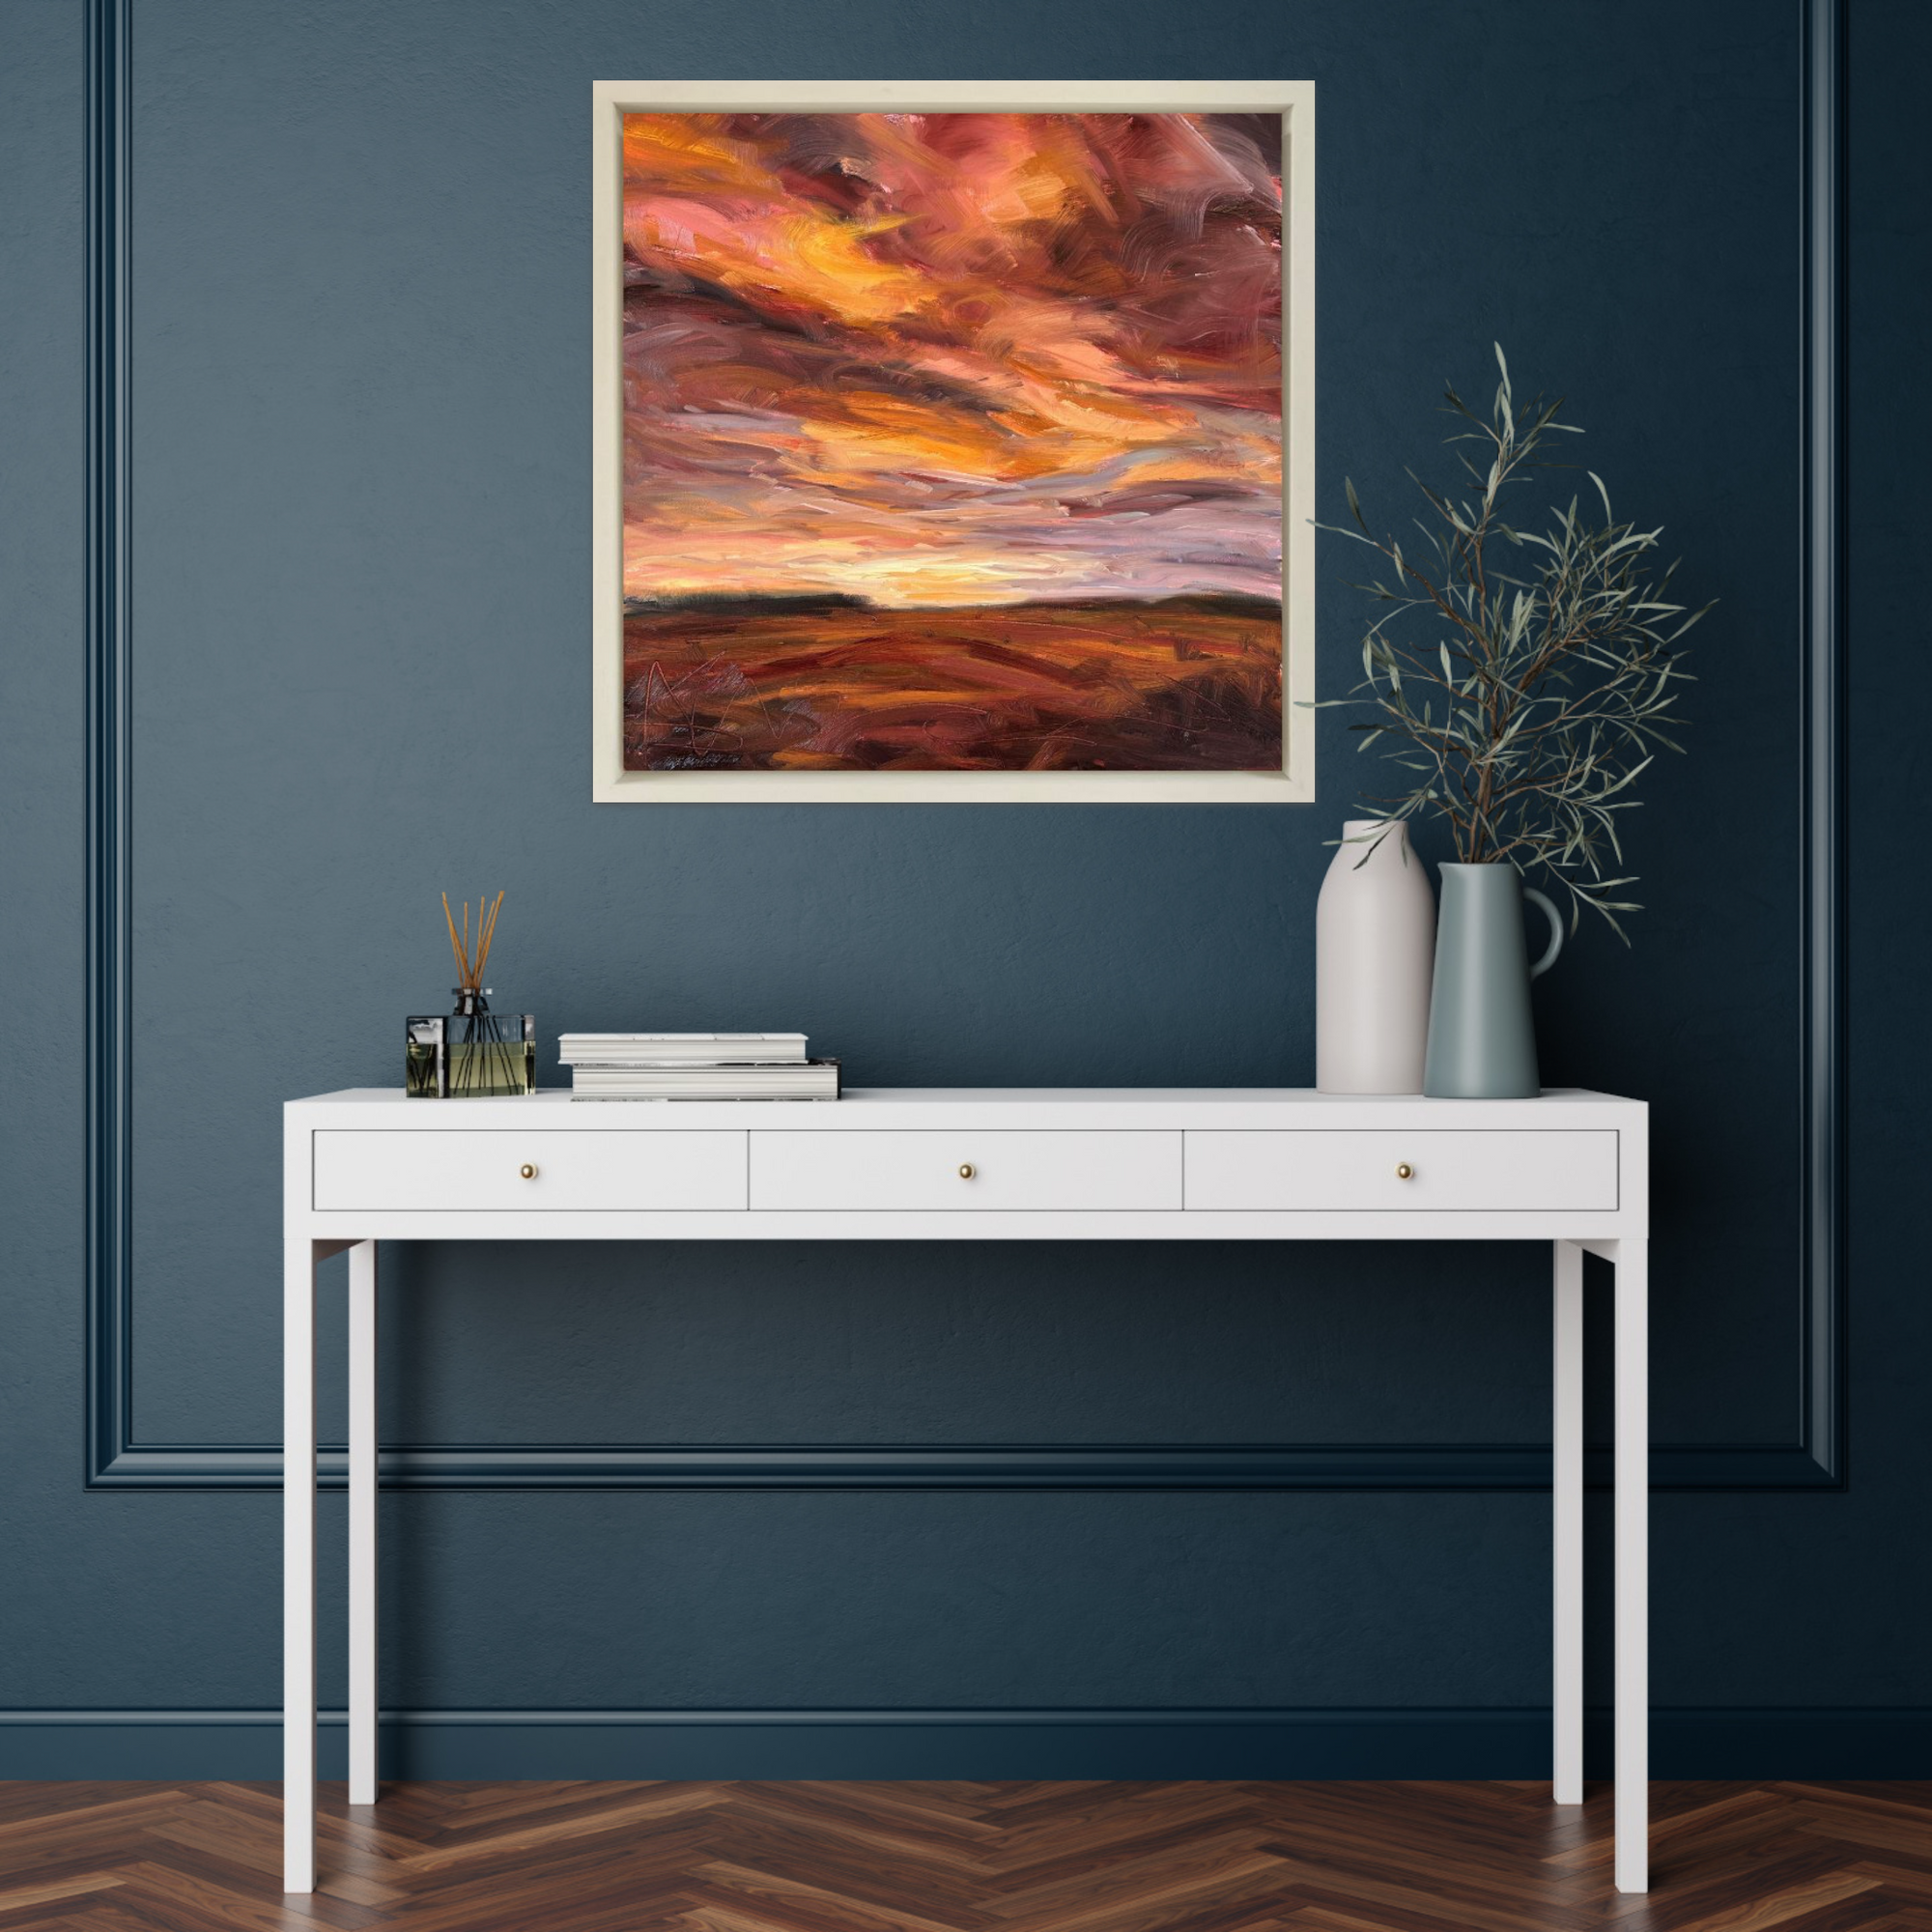 Fiery Light Original Oil Landscape Painting In Room Setting 1